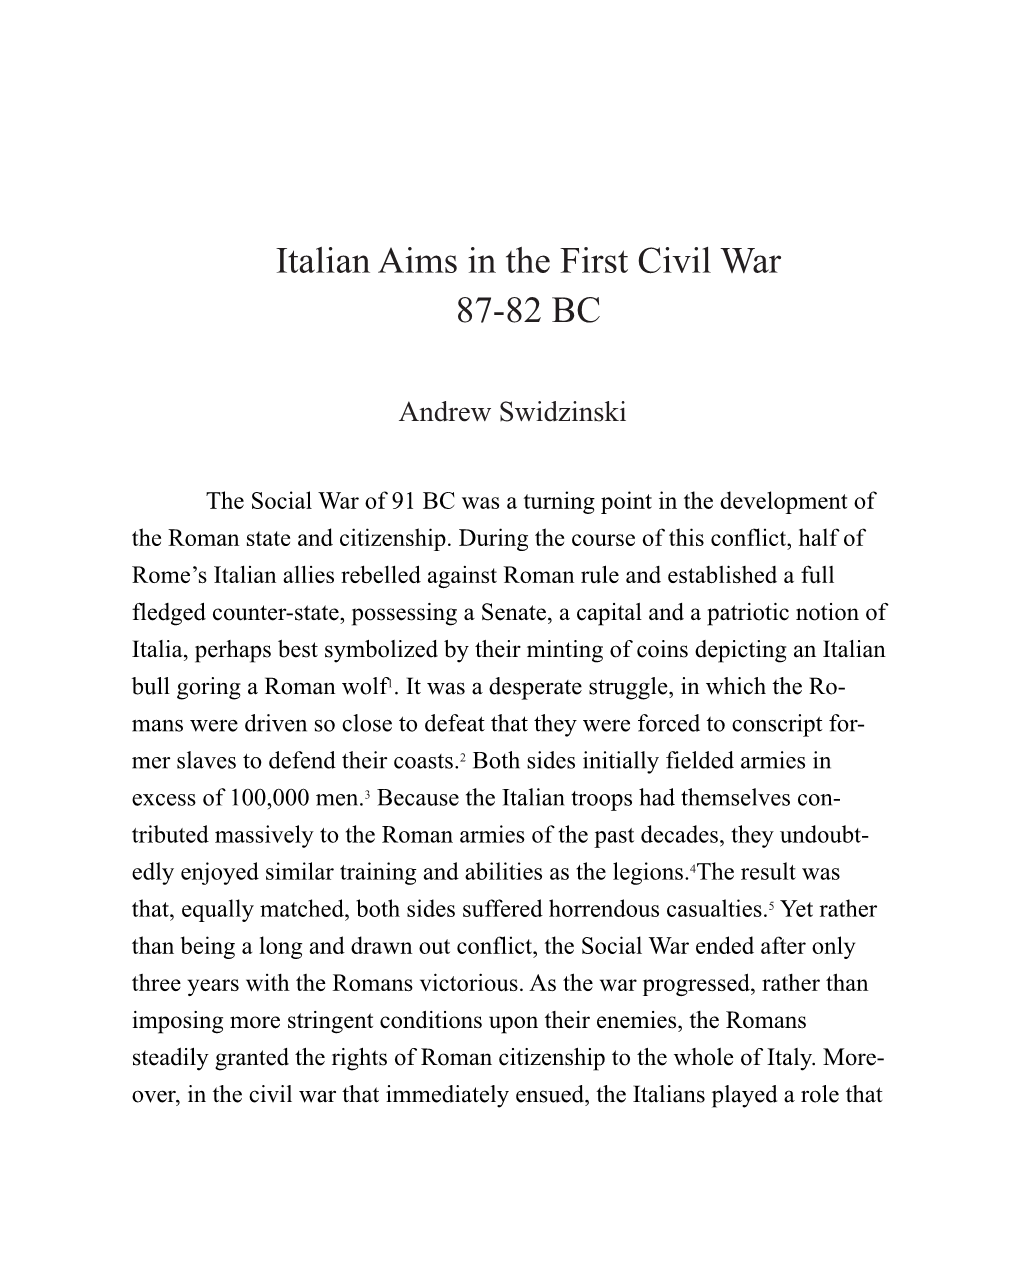 Andrew Swidzinski, Italian Aims in the First Civil War, 87-82 BC